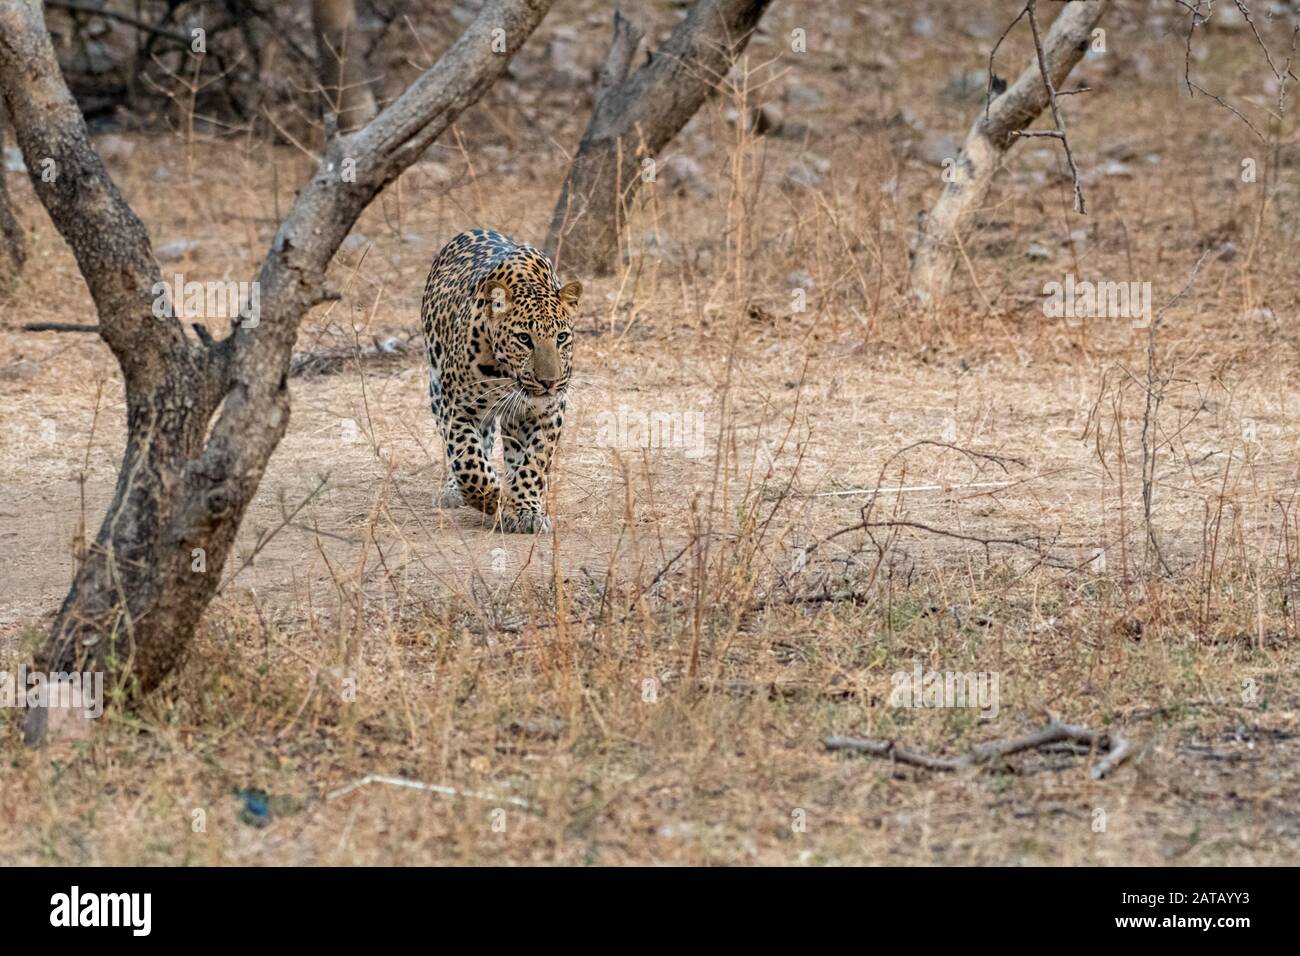 leopardo indiano o pantera o panthera pardus fusca in una passeggiata serale o a piedi nella foresta di jhalana riserva forestale, jaipur, rajasthan, india Foto Stock